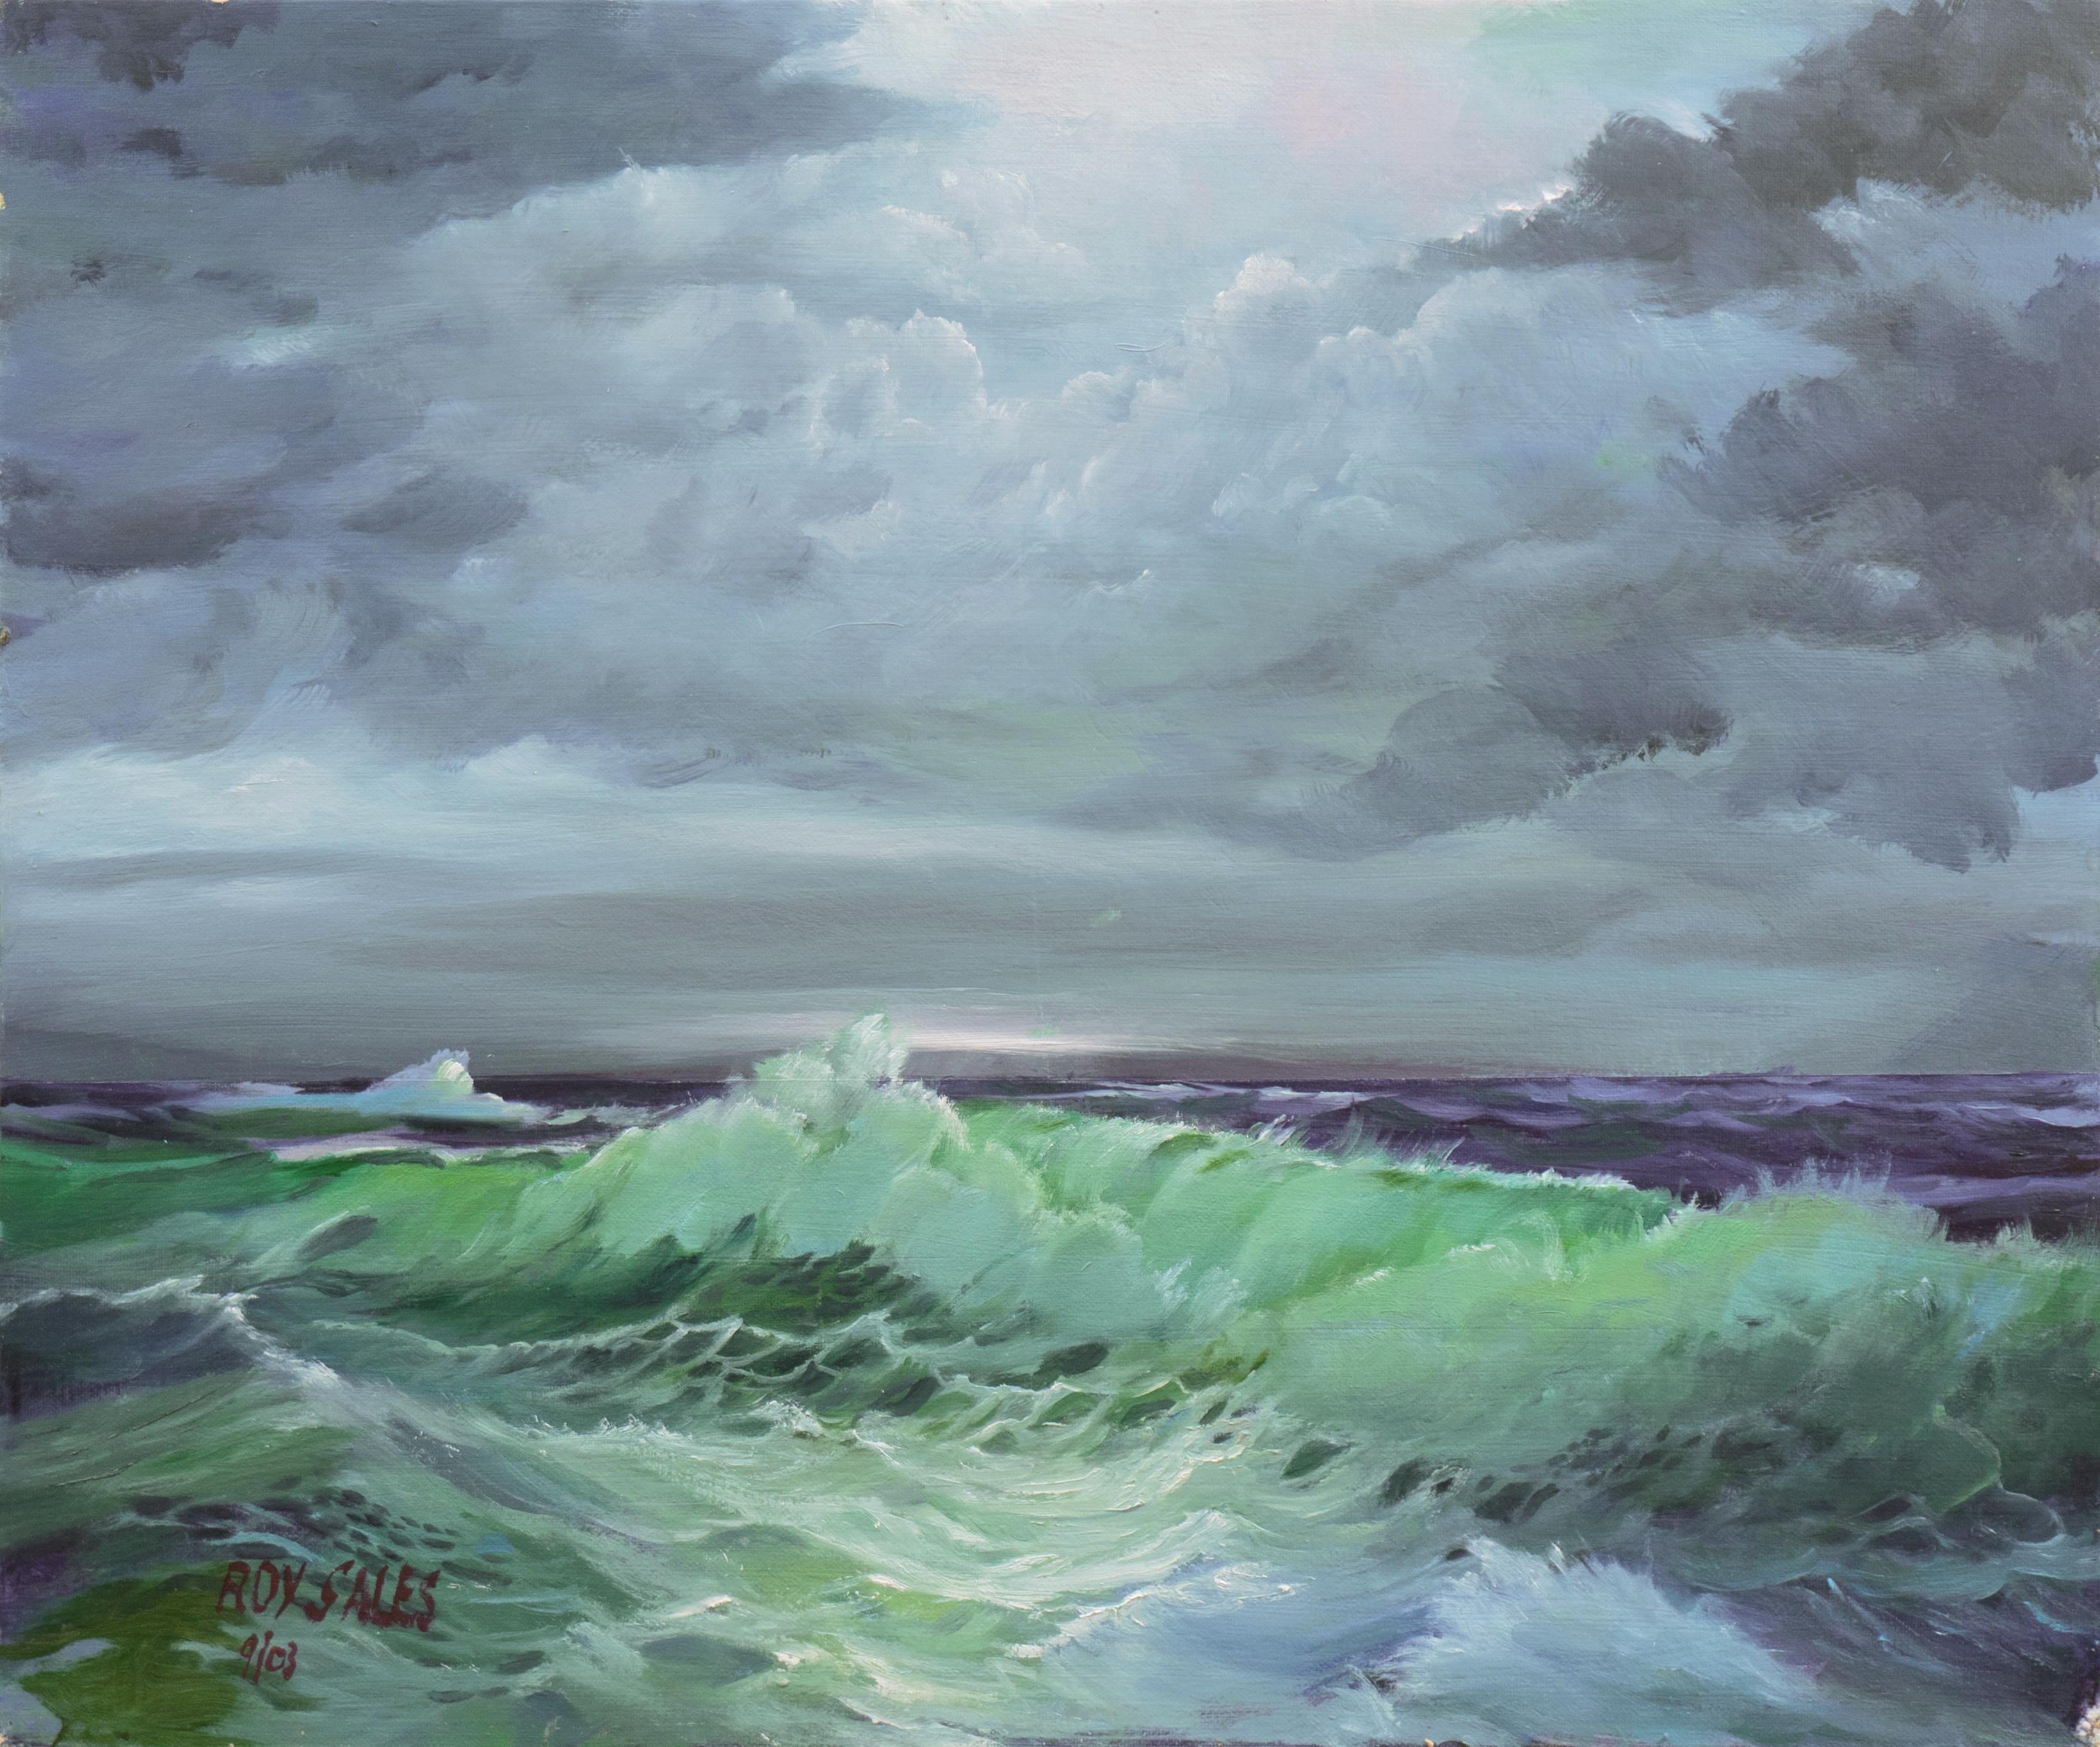 Roy Rose Sales Landscape Painting - 'After the Storm', Turbulent Seascape